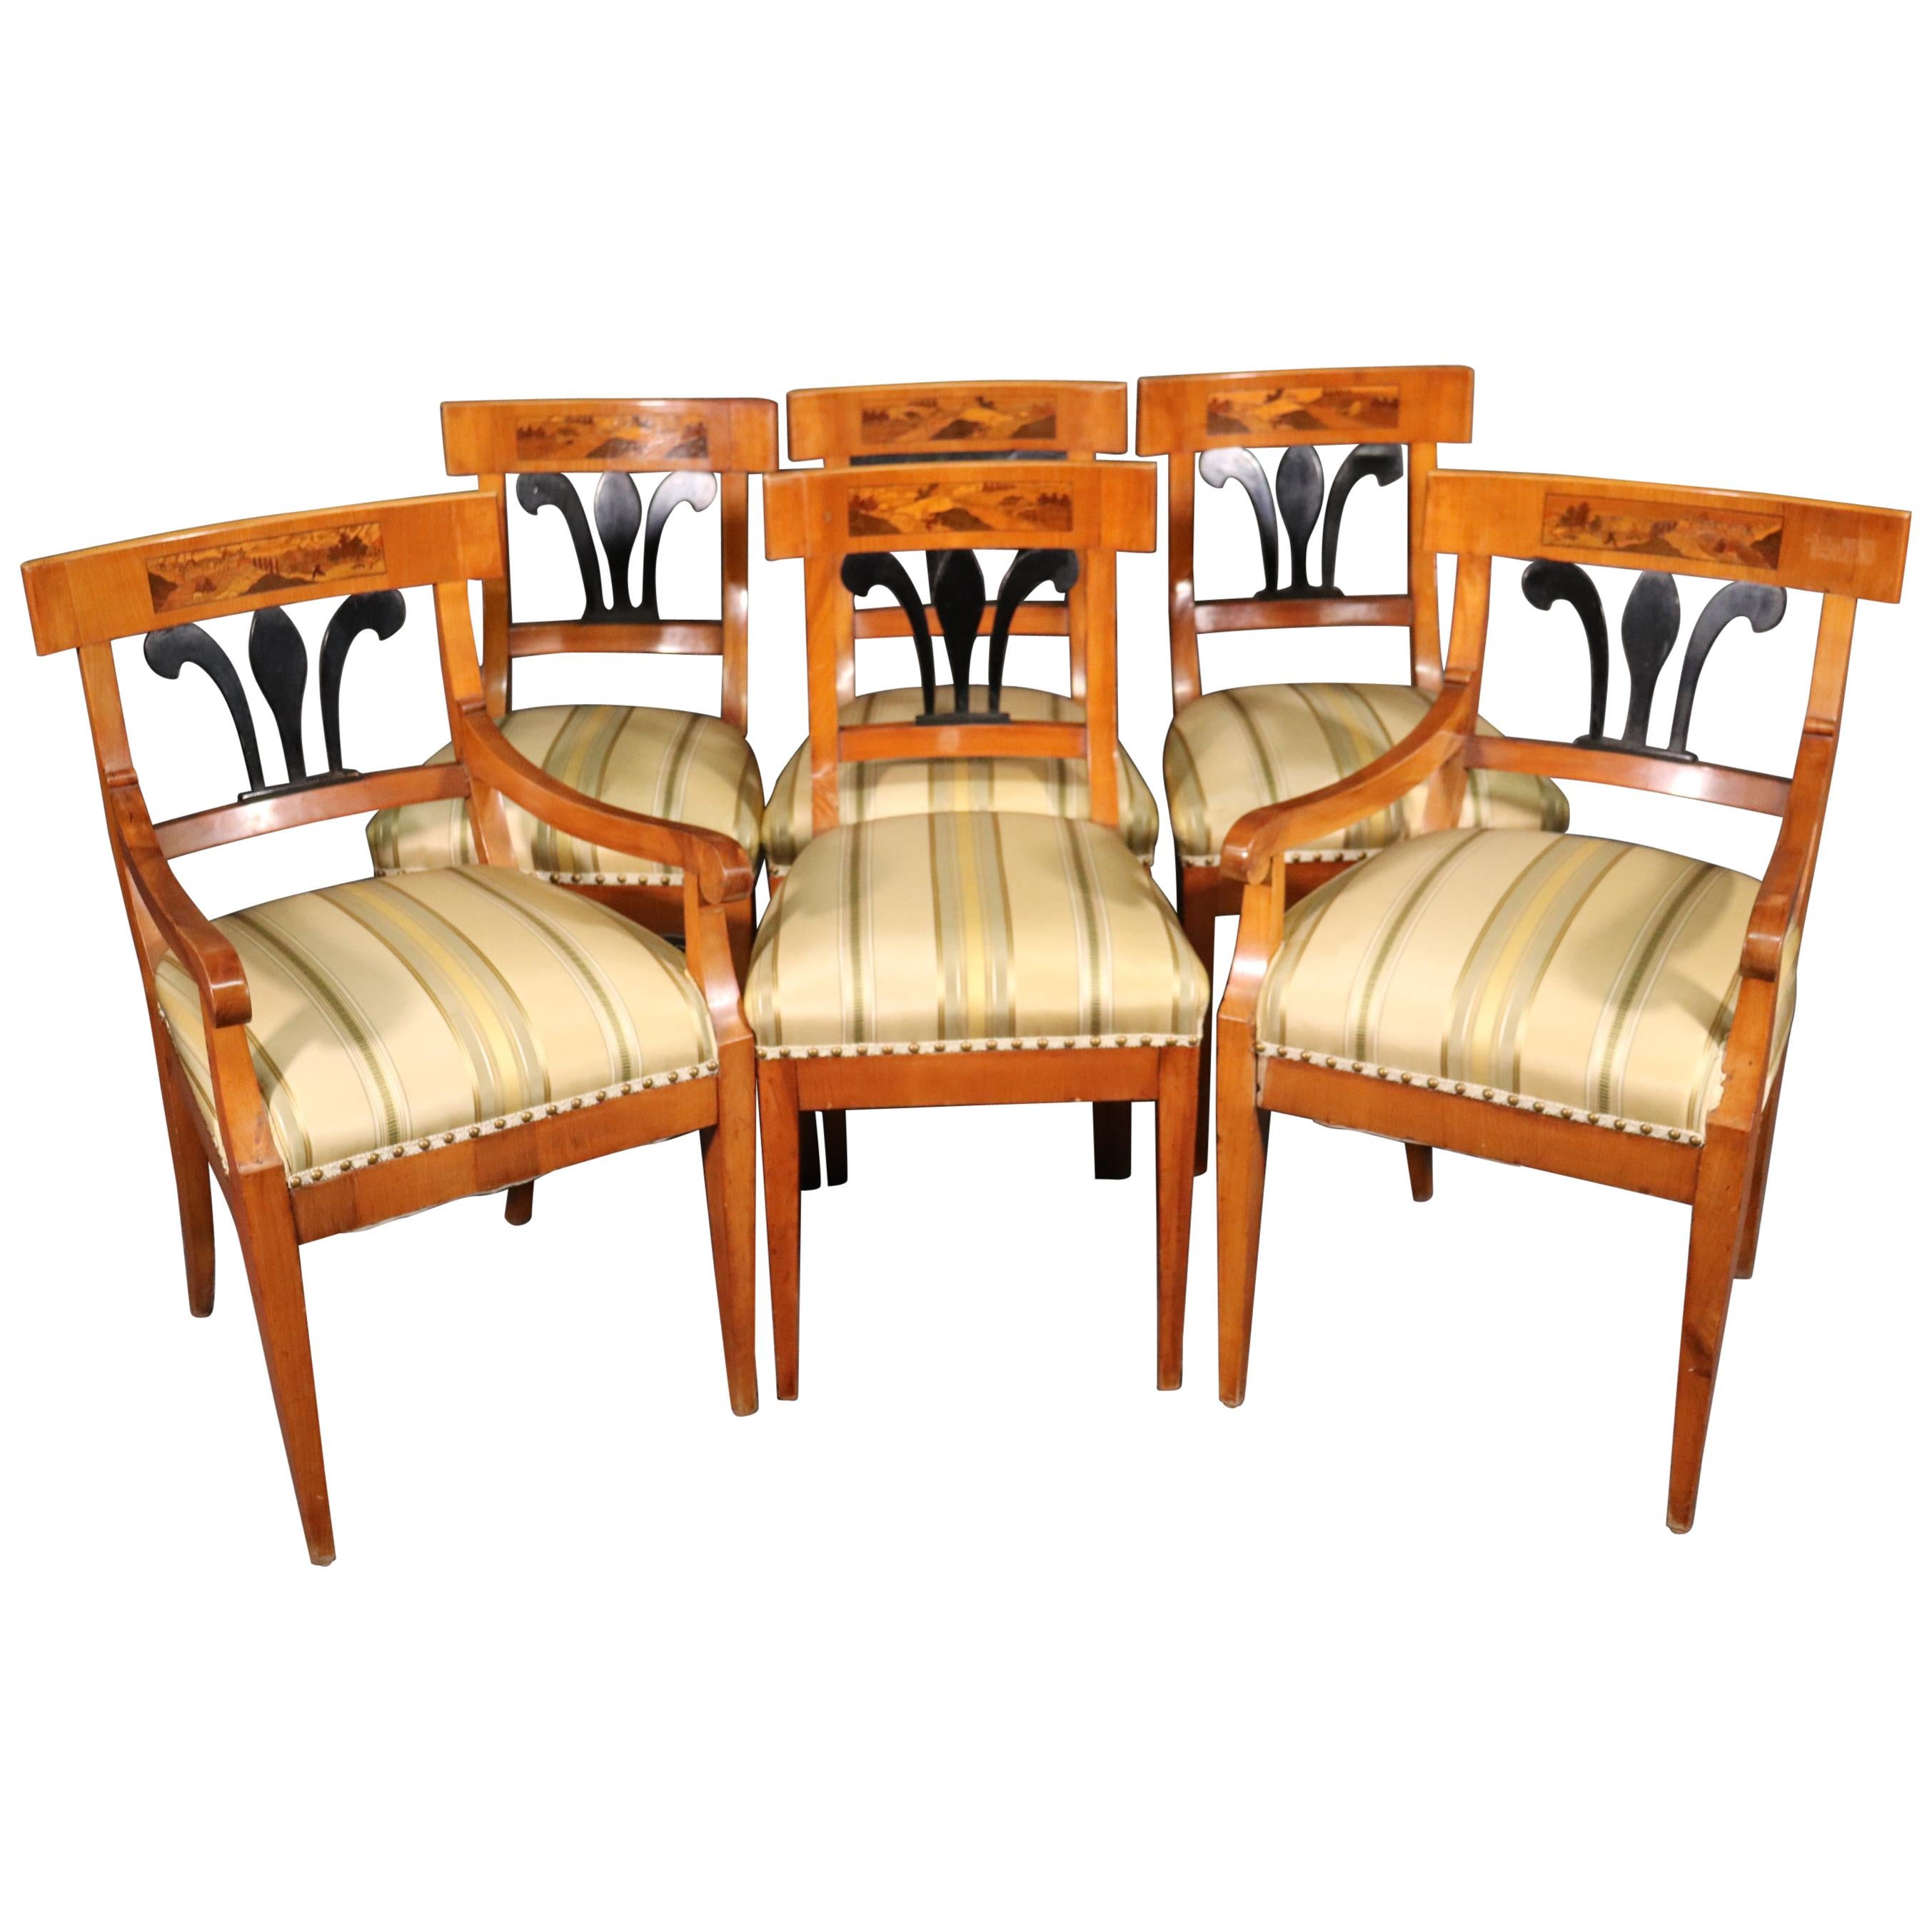 Set 6 Antique Biedermeier Birch and Ebonized Dining Chairs